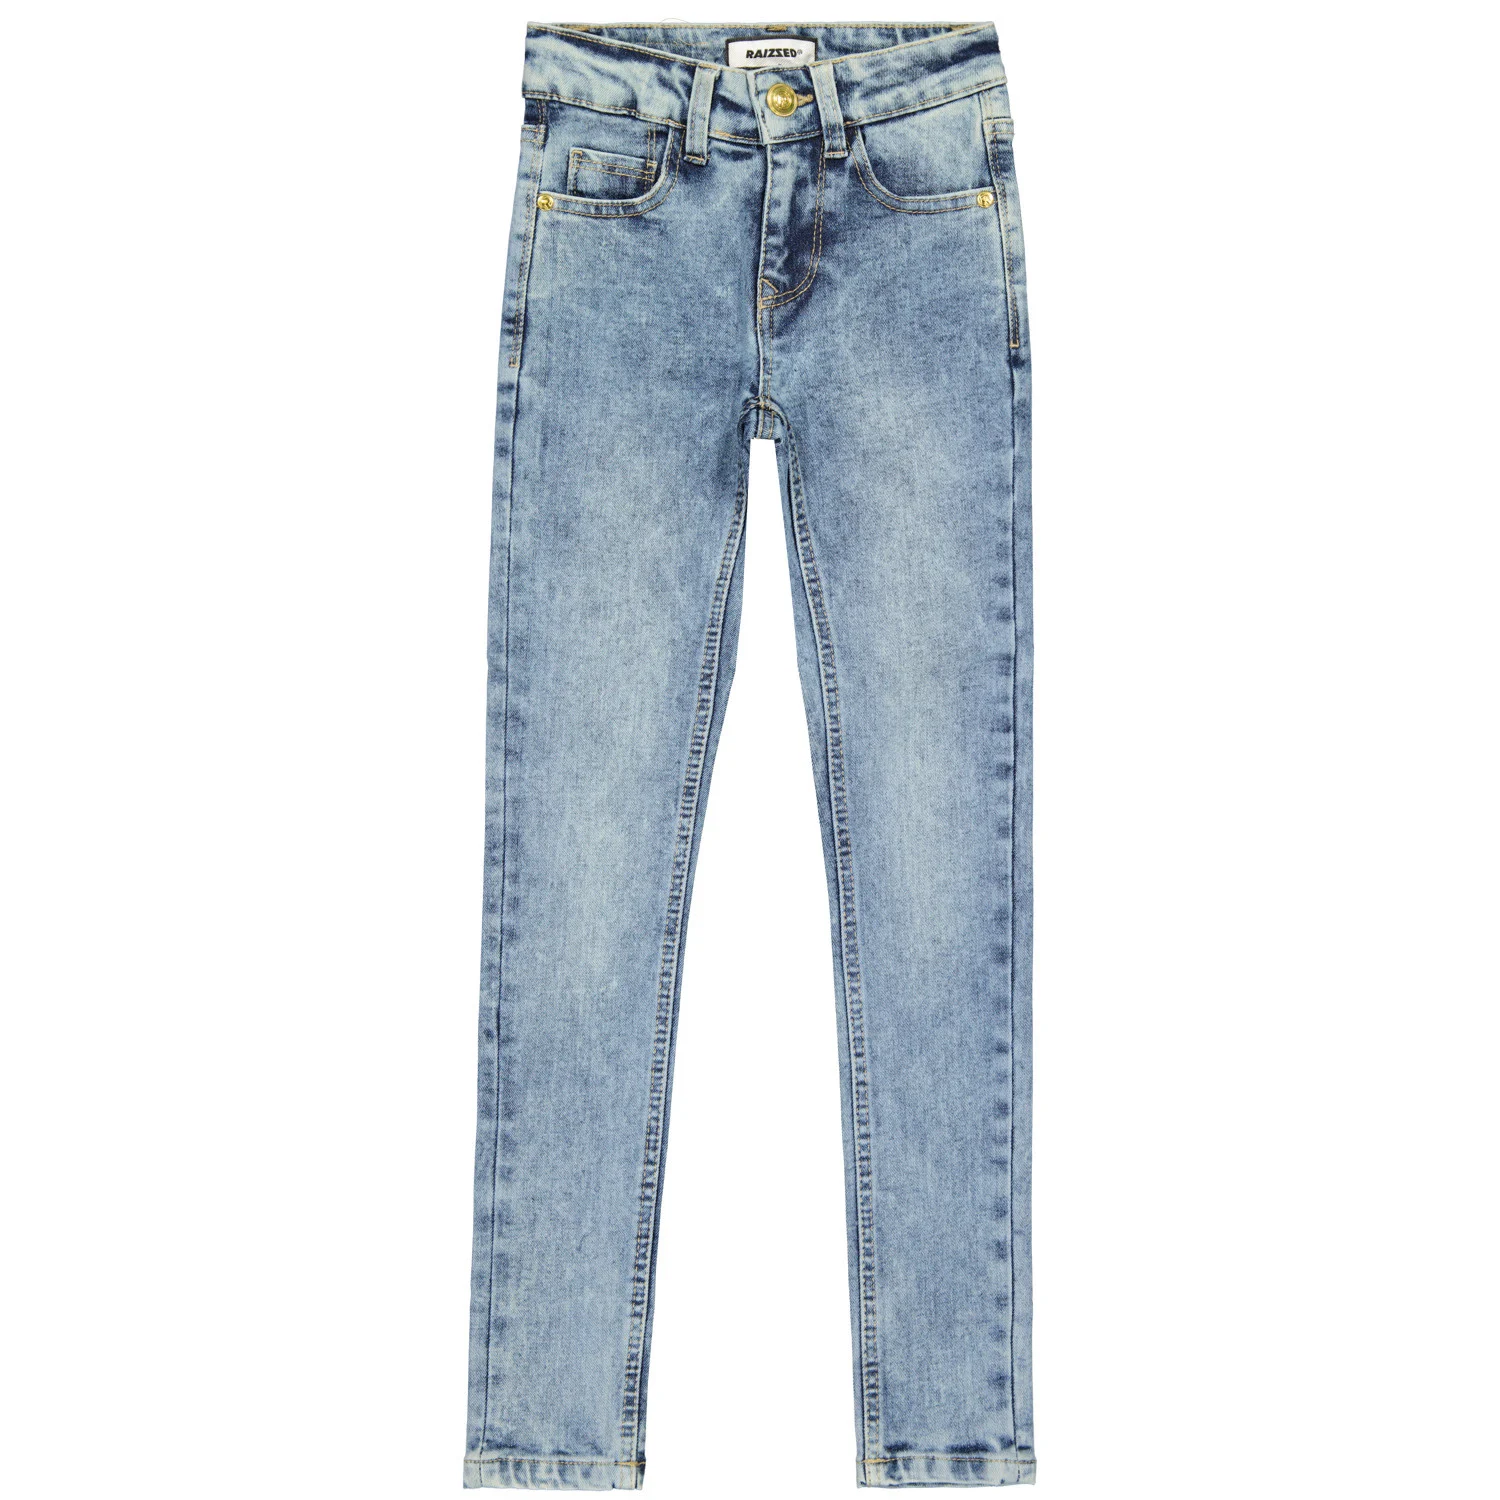 Afbeelding van Raizzed Meiden jeans chelsea super skinny fit vintage blue